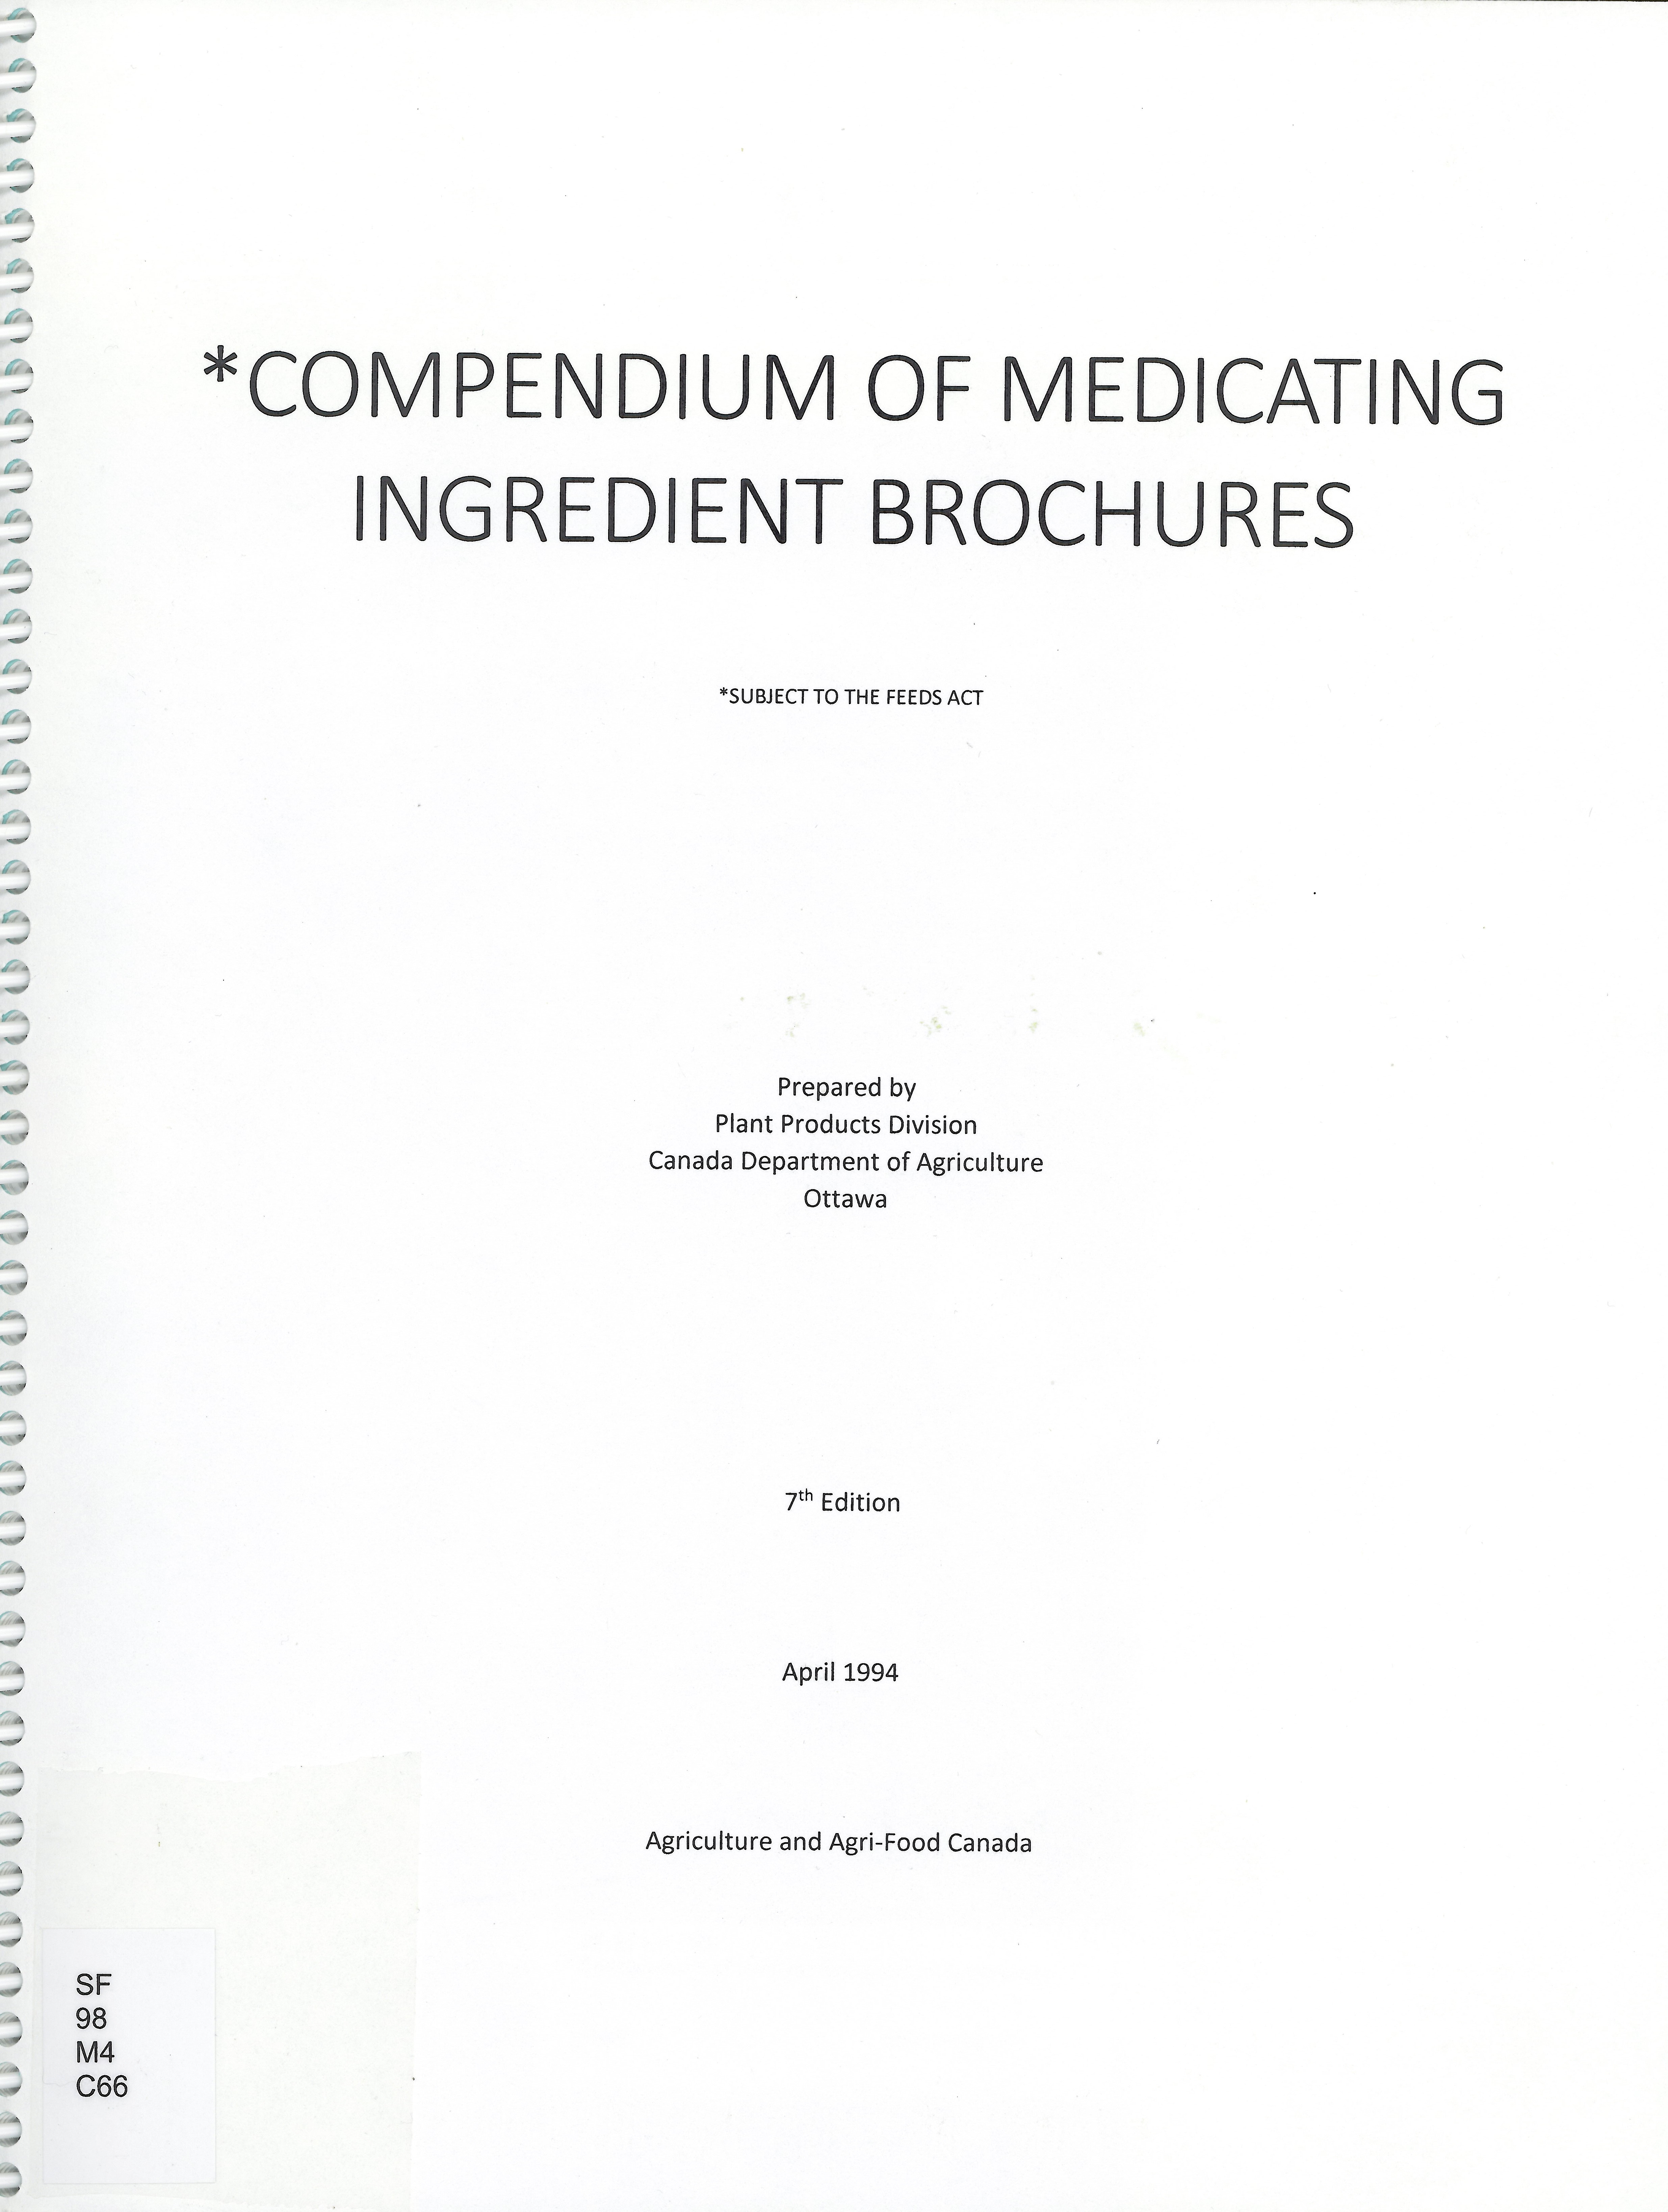 Compendium of medicating ingredient brochures